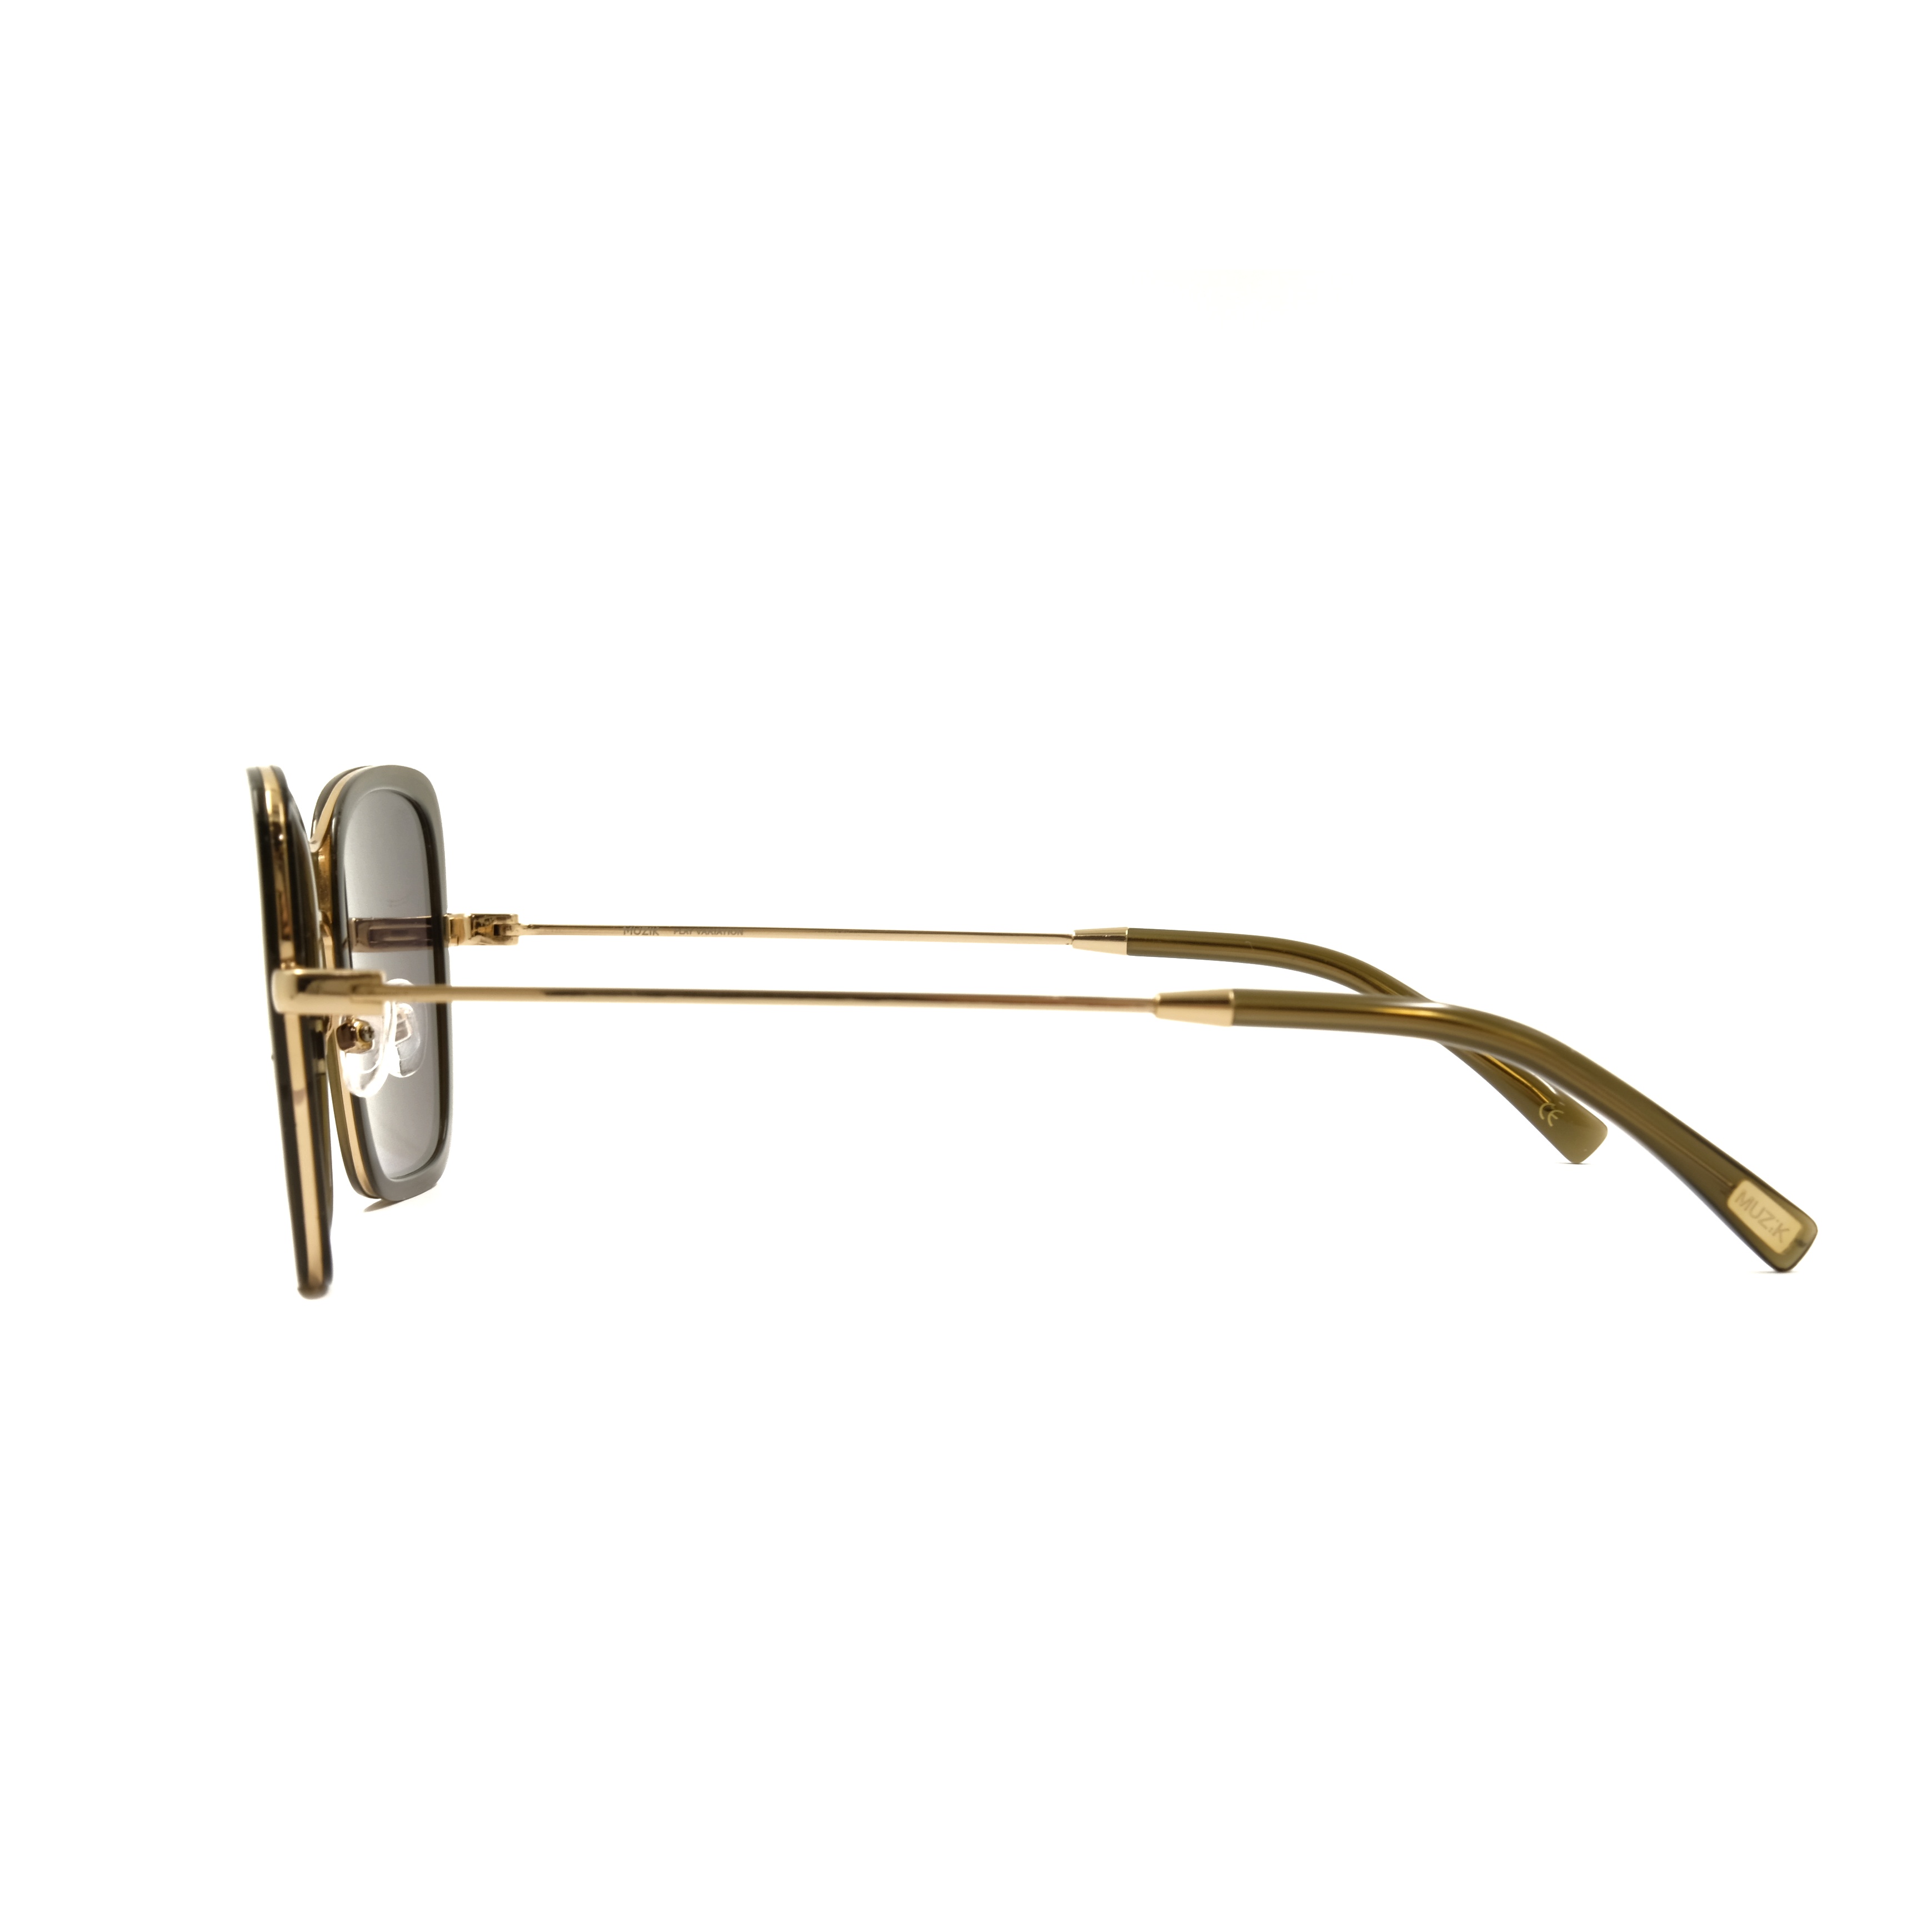 Bespoke Sunglasses Supplier China Gold Acetate Frame Square Sunglasses Gensun Sunperia Eyewear